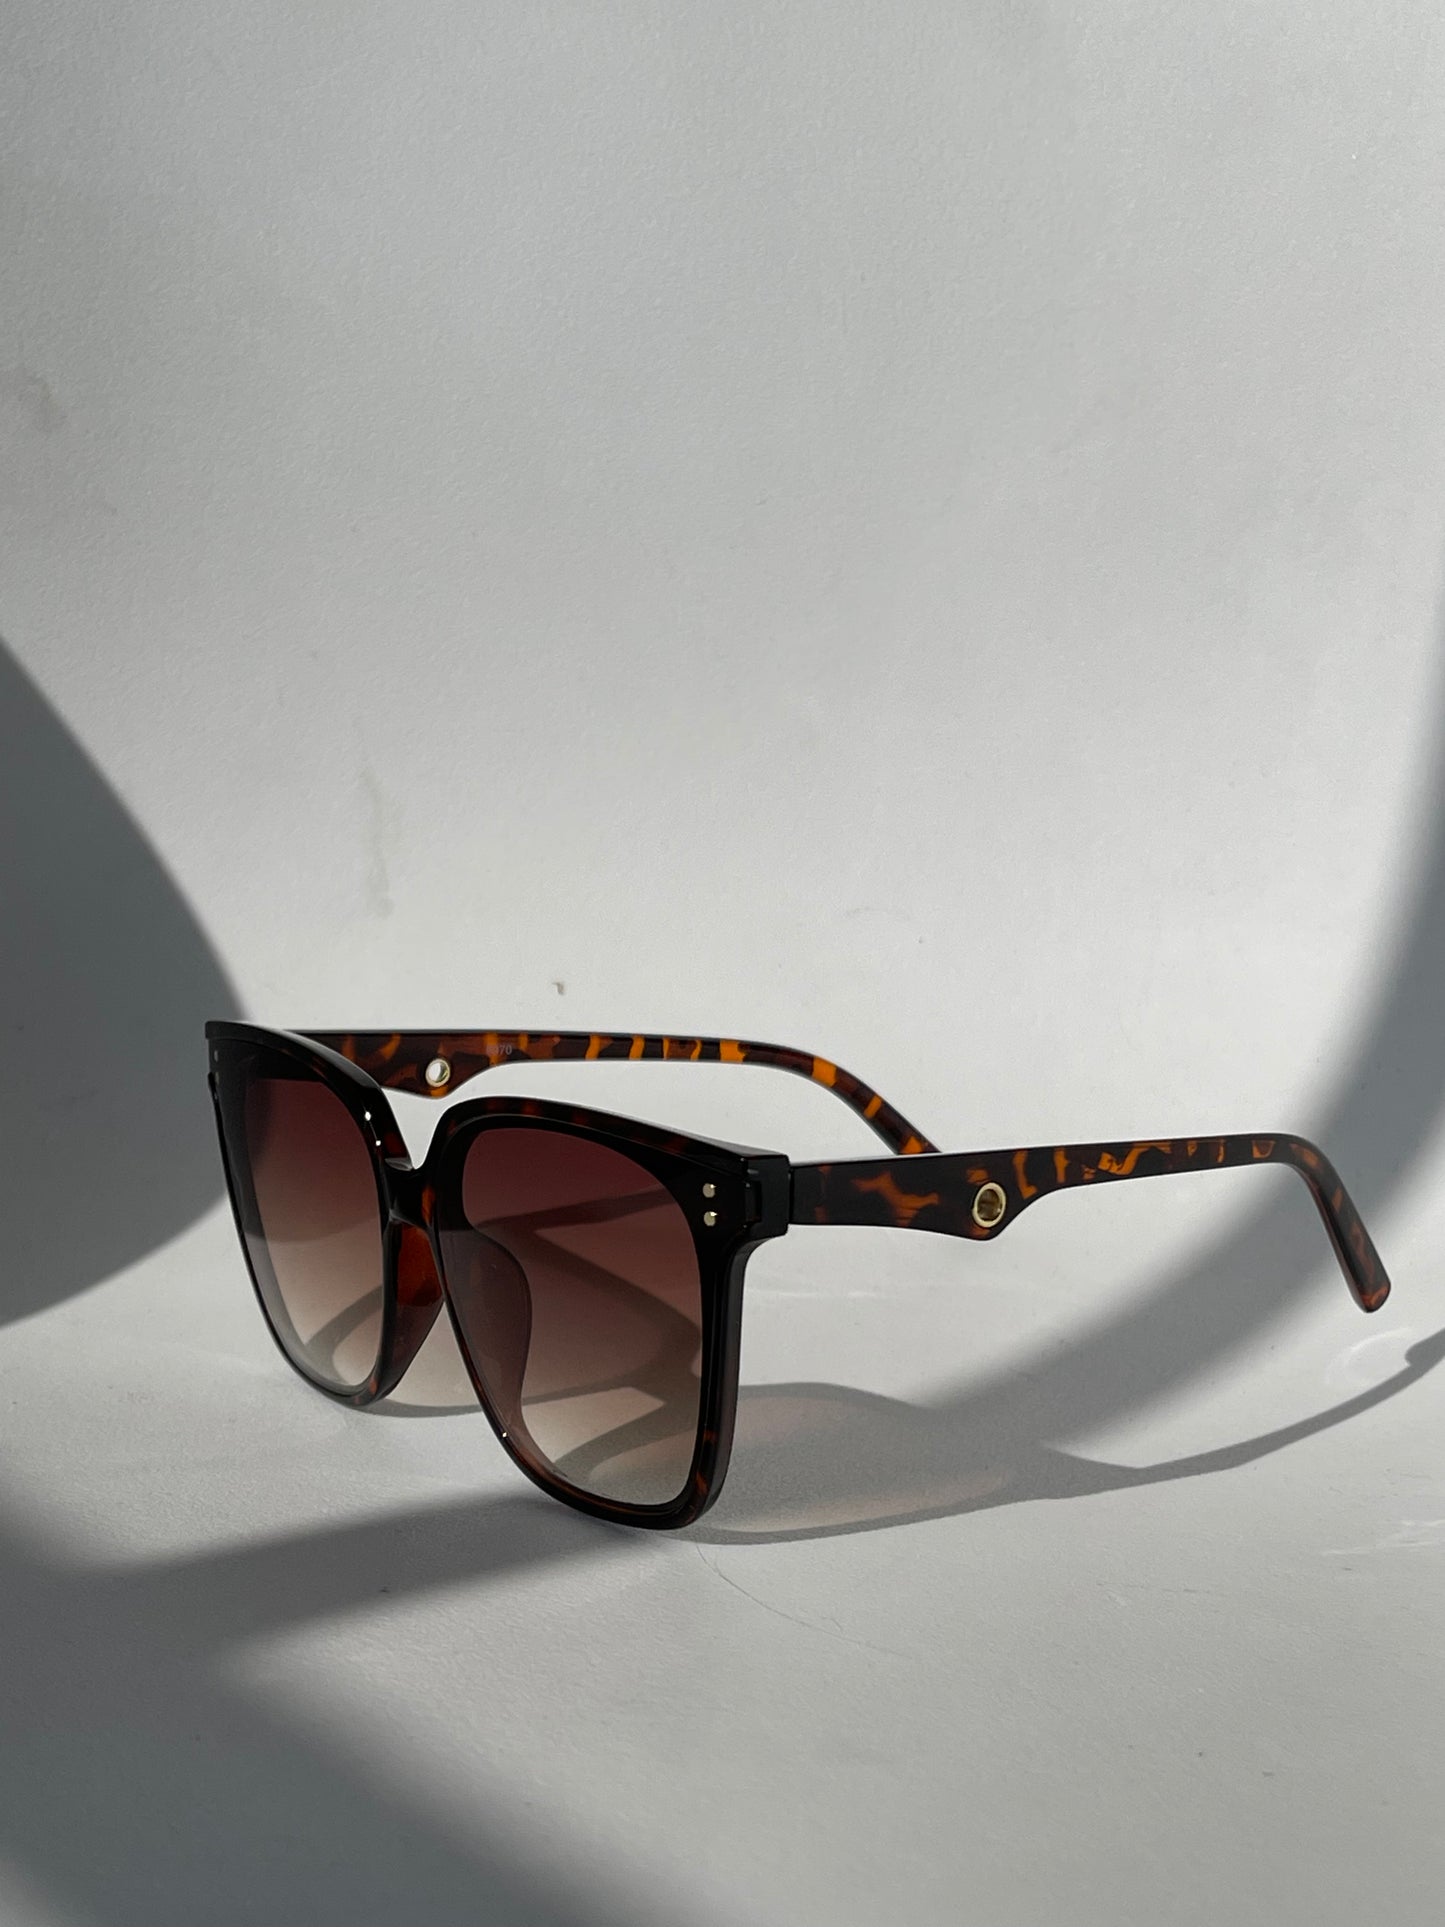 Susan Double Stud 70s Style Sunglasses In Tortoise